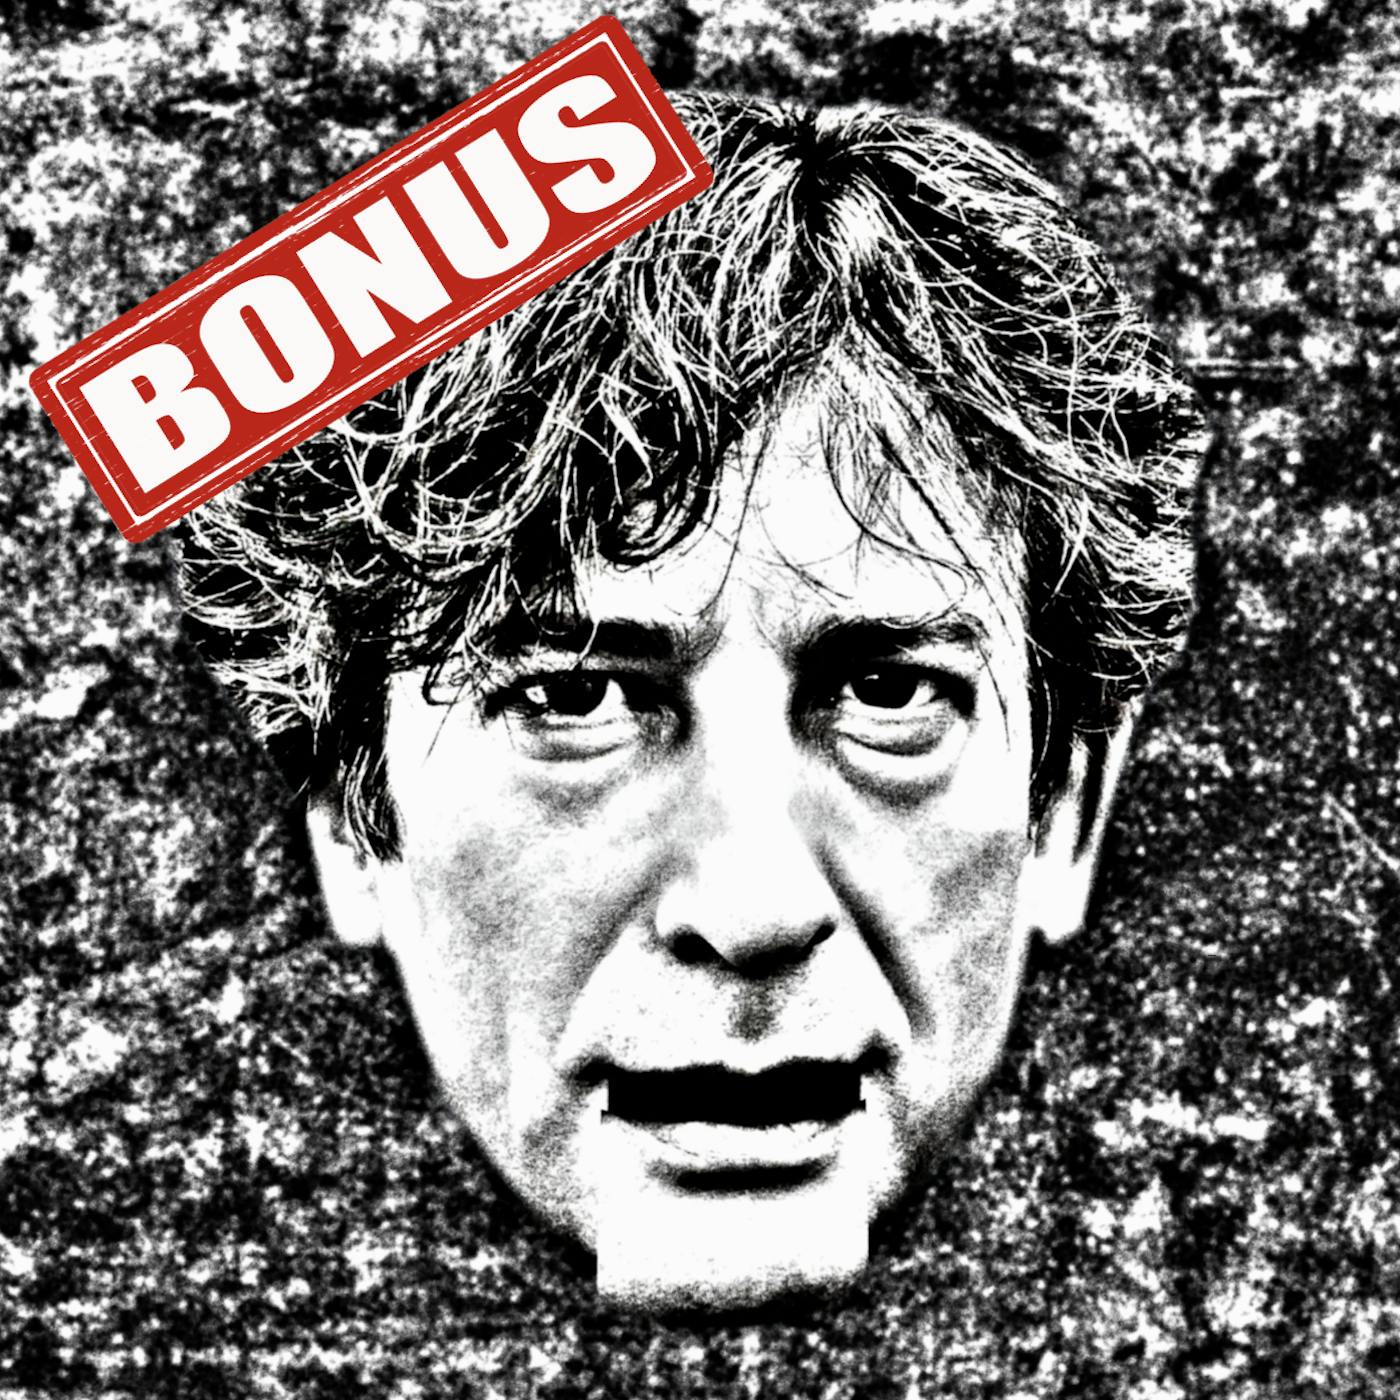 Bonus-wag: More with Neil Gaiman